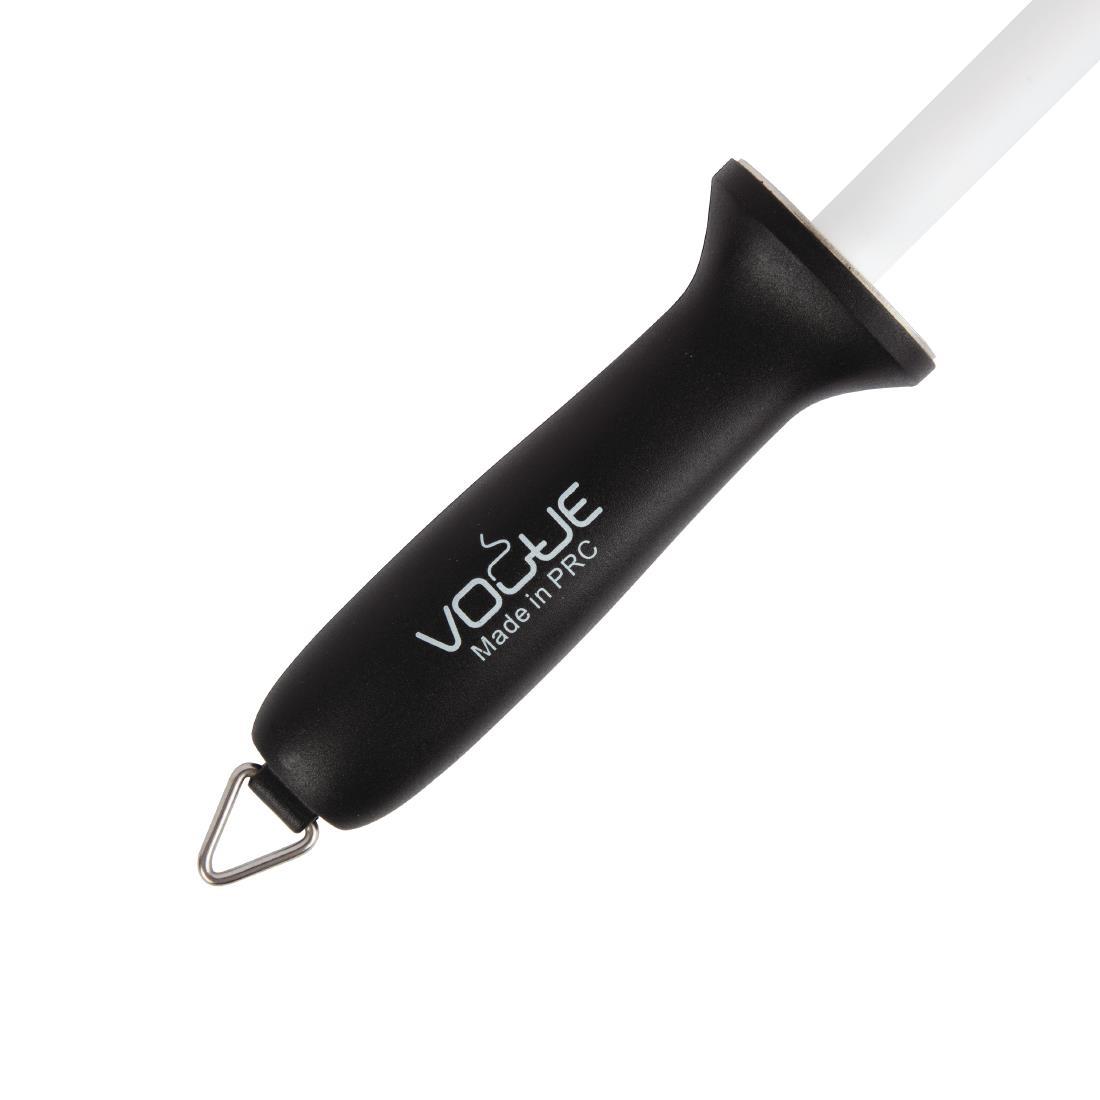 Vogue Ceramic Knife Sharpening Steel 30.5cm - GG002  - 4